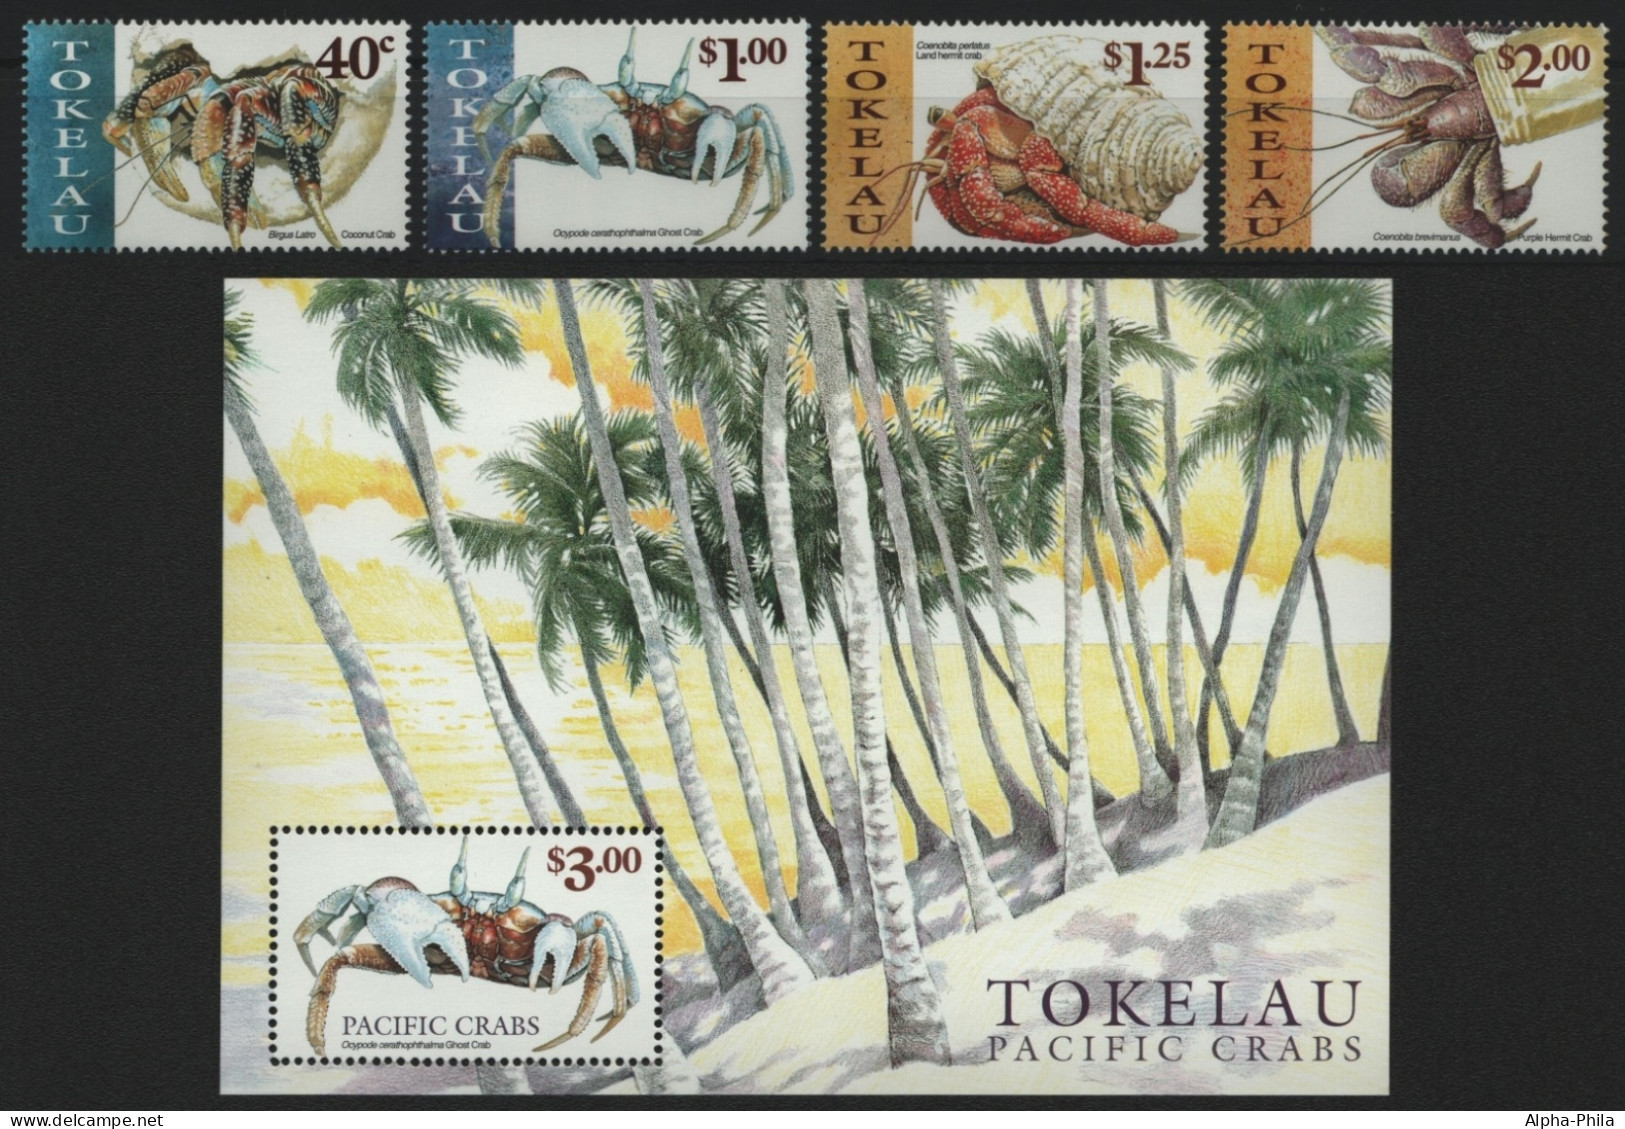 Tokelau 1999 - Mi-Nr. 277-280 & Block 18 ** - MNH - Krebstiere / Crustaceans - Tokelau